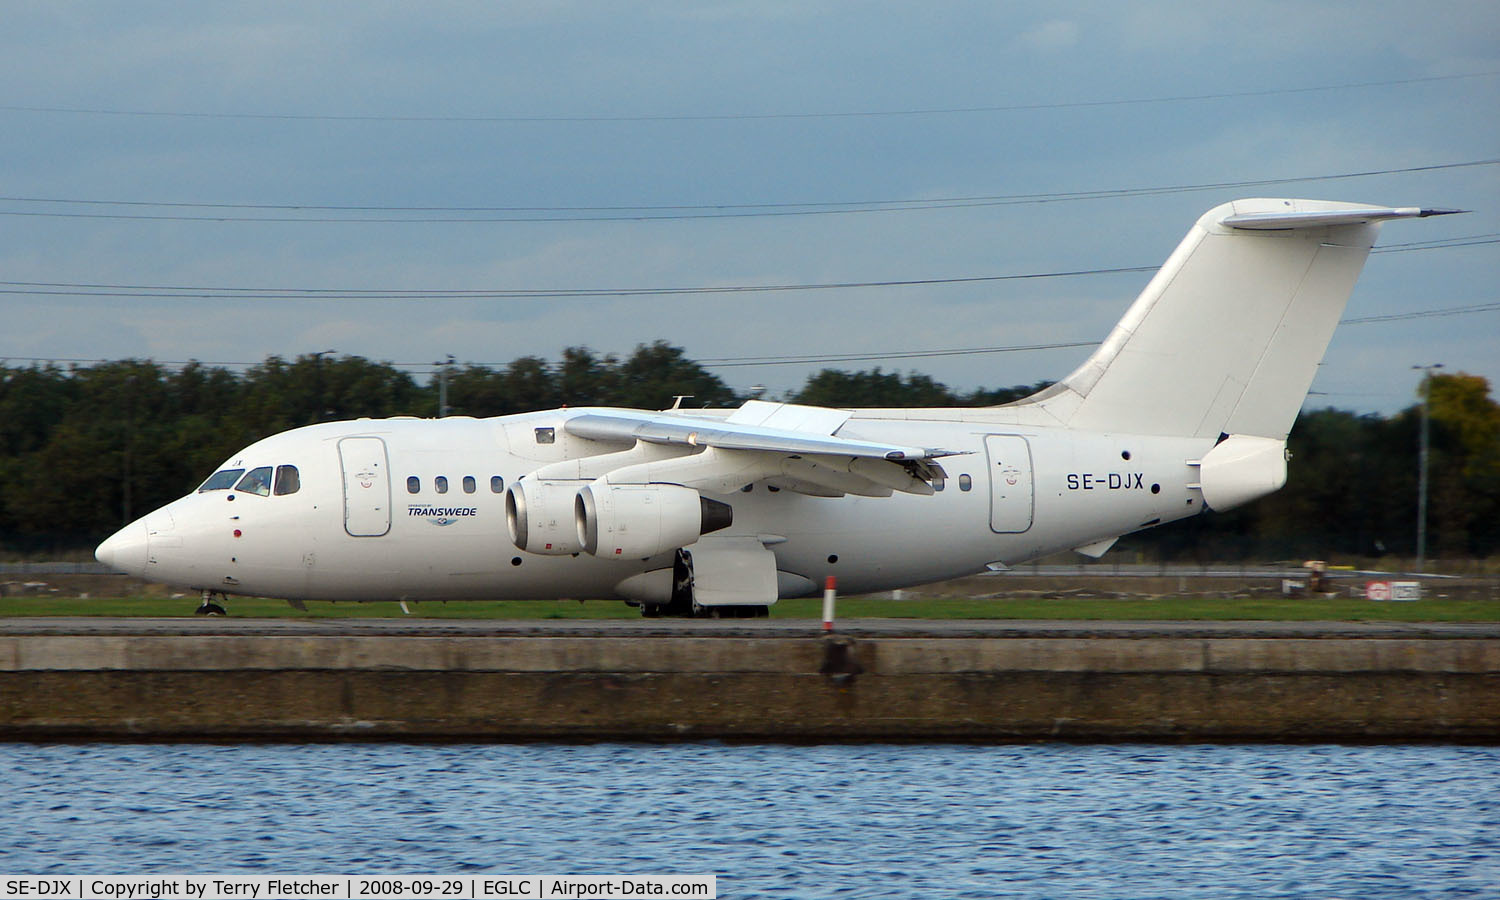 SE-DJX, 1993 British Aerospace Avro 146-RJ70 C/N E1223, SAS Bae 146 operated by Transwede into London City